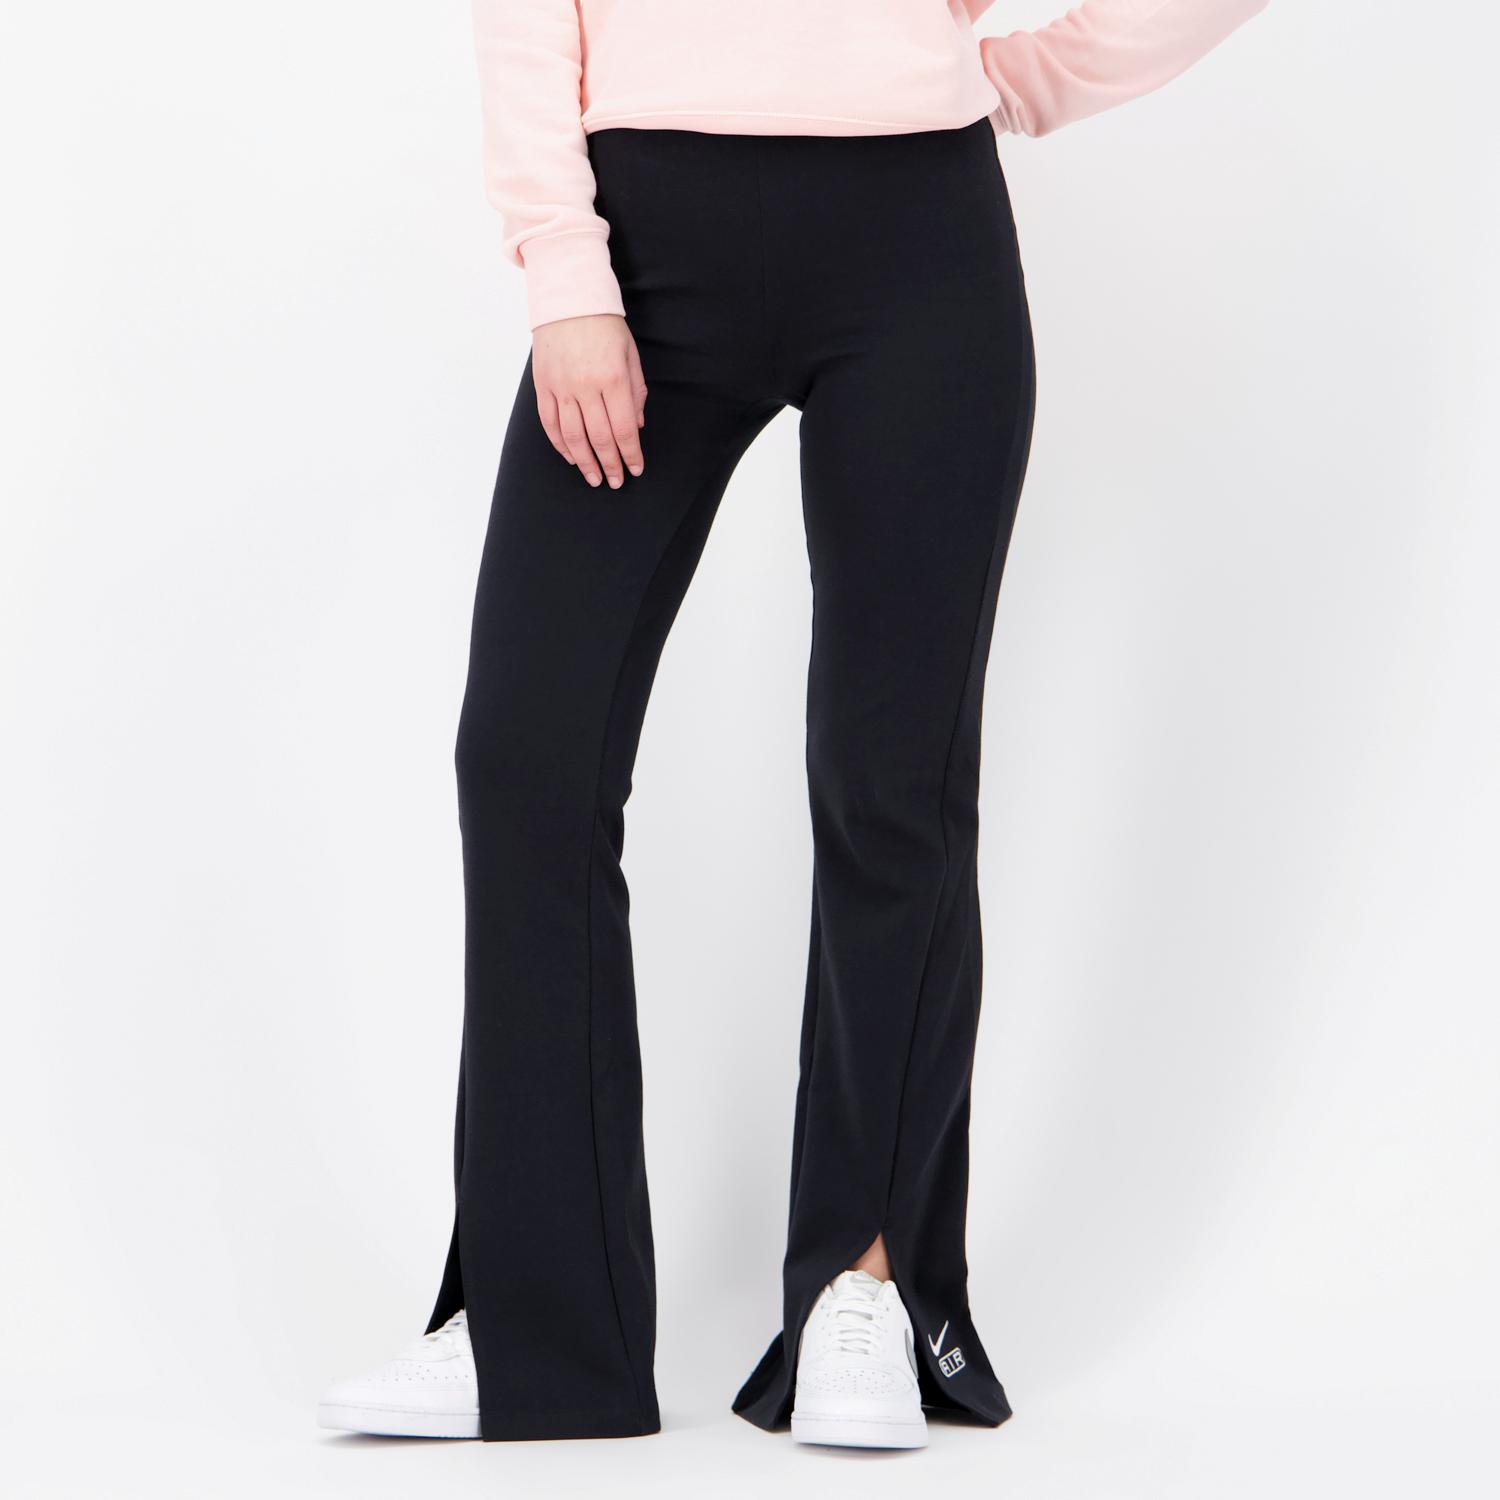 Pantalones Negros para Mujer - Compra Online Pantalones Negros